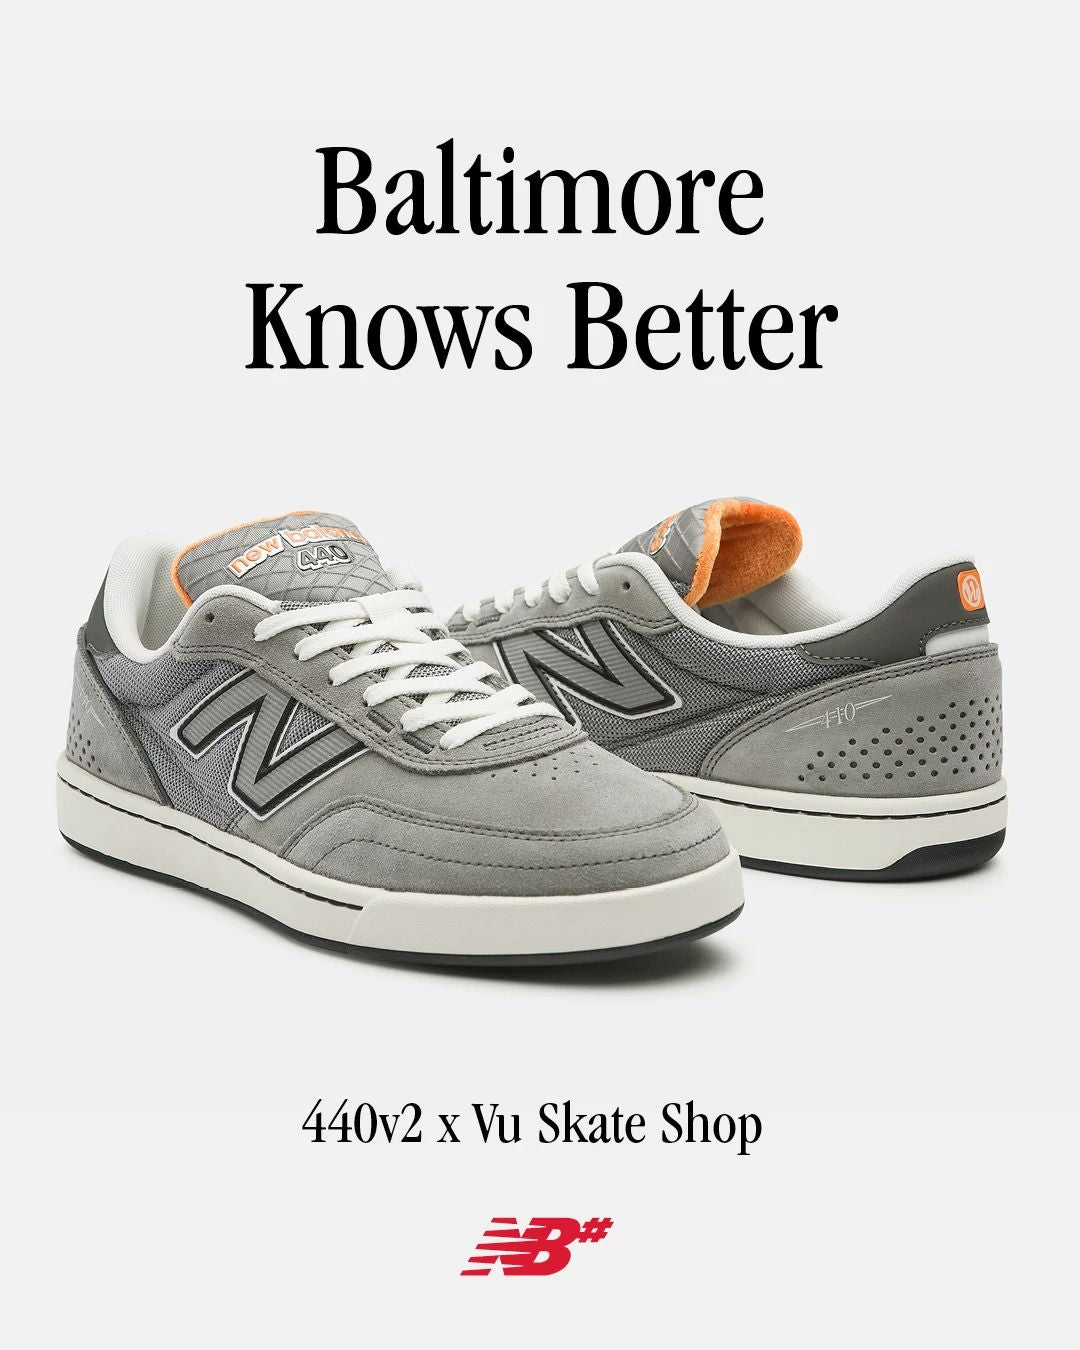 New Balance 440v2 X Vu Skate Shop - Venue Skateboards